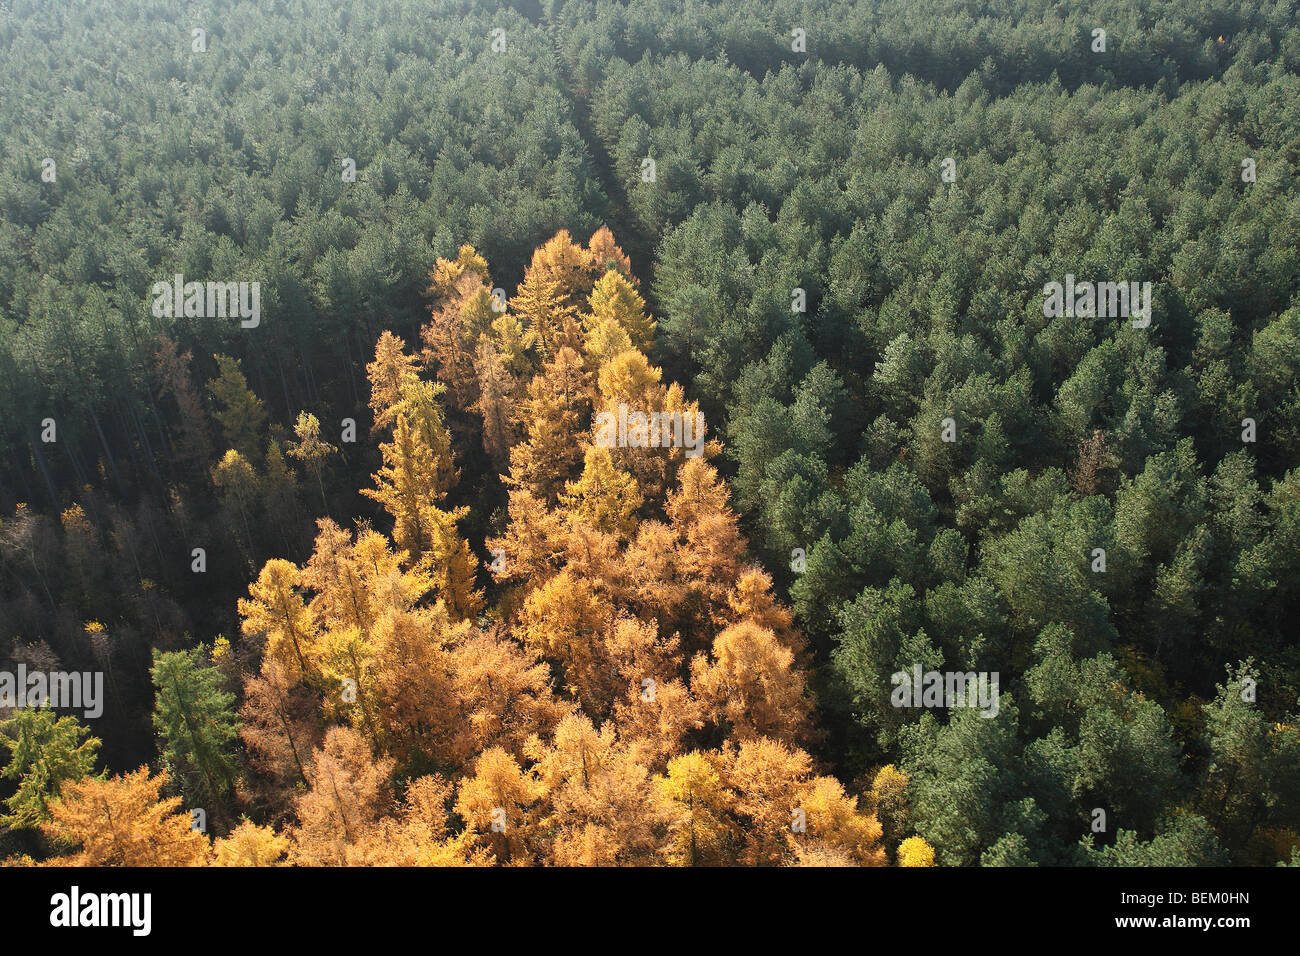 Pine forest with European larch (Larix decidua) from the air, Belgium Stock Photo